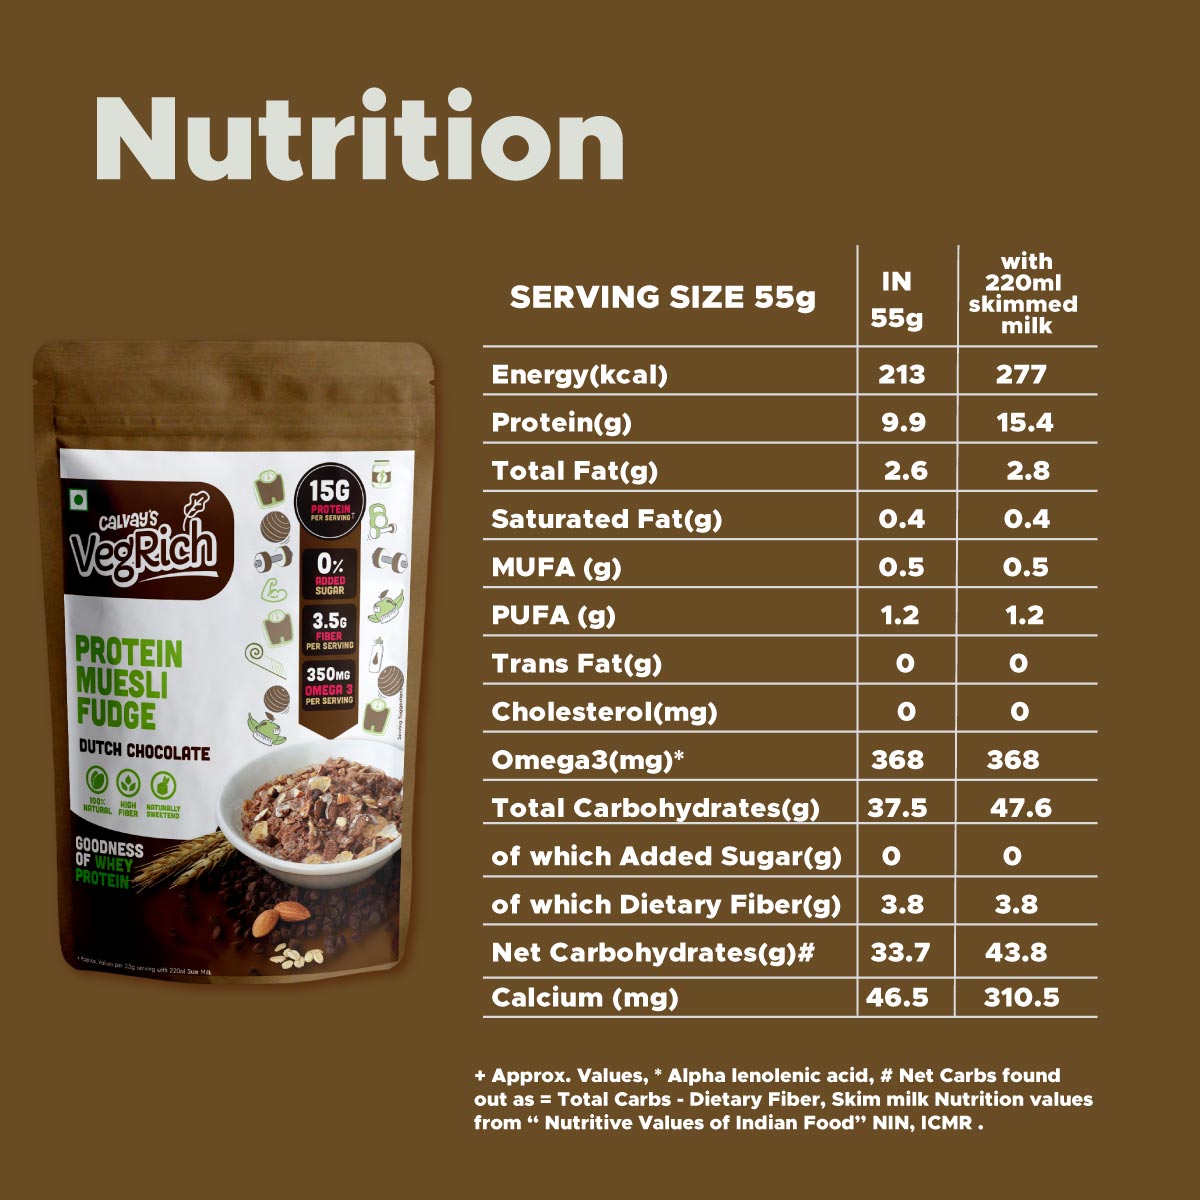 Nutrition information for protein muesli Dutch Chocolate